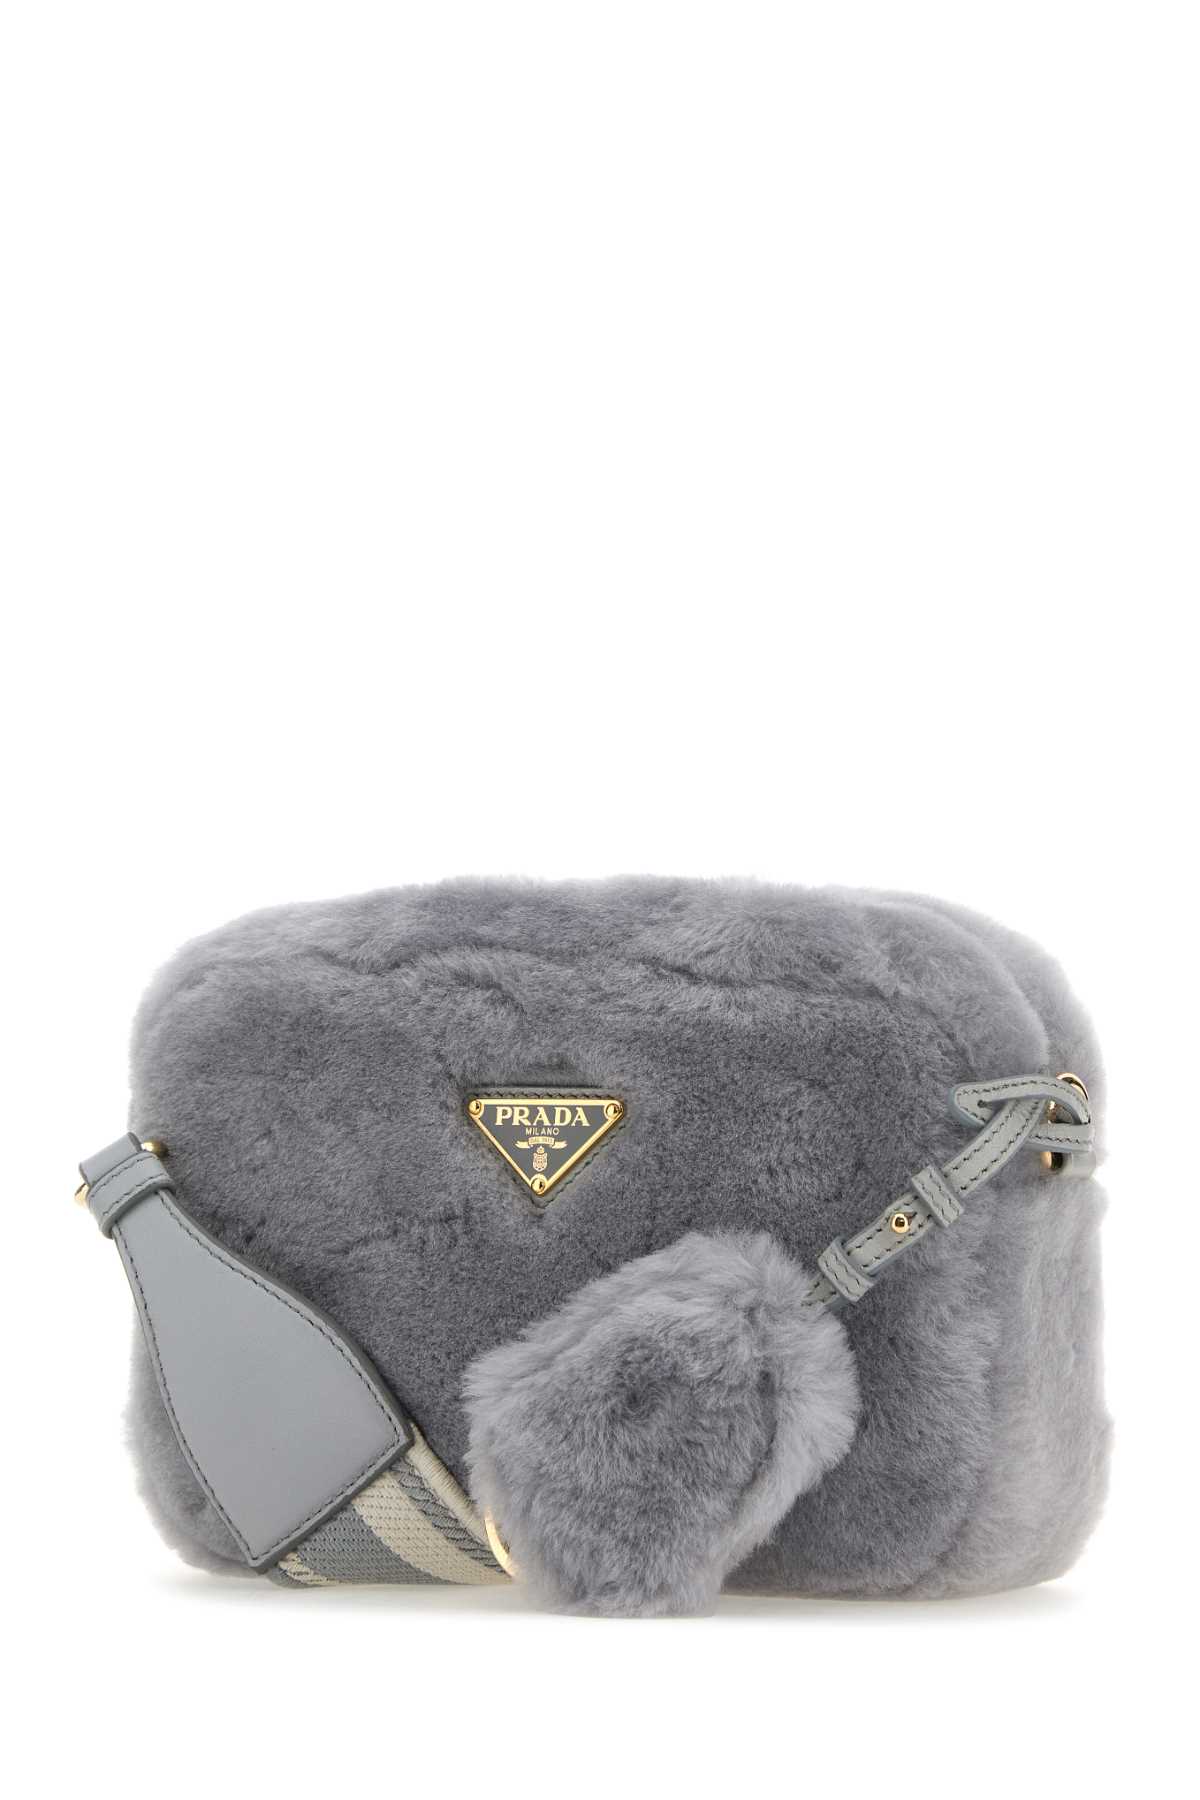 Prada Grey Shearling Crossbody Bag In Fiordaliso